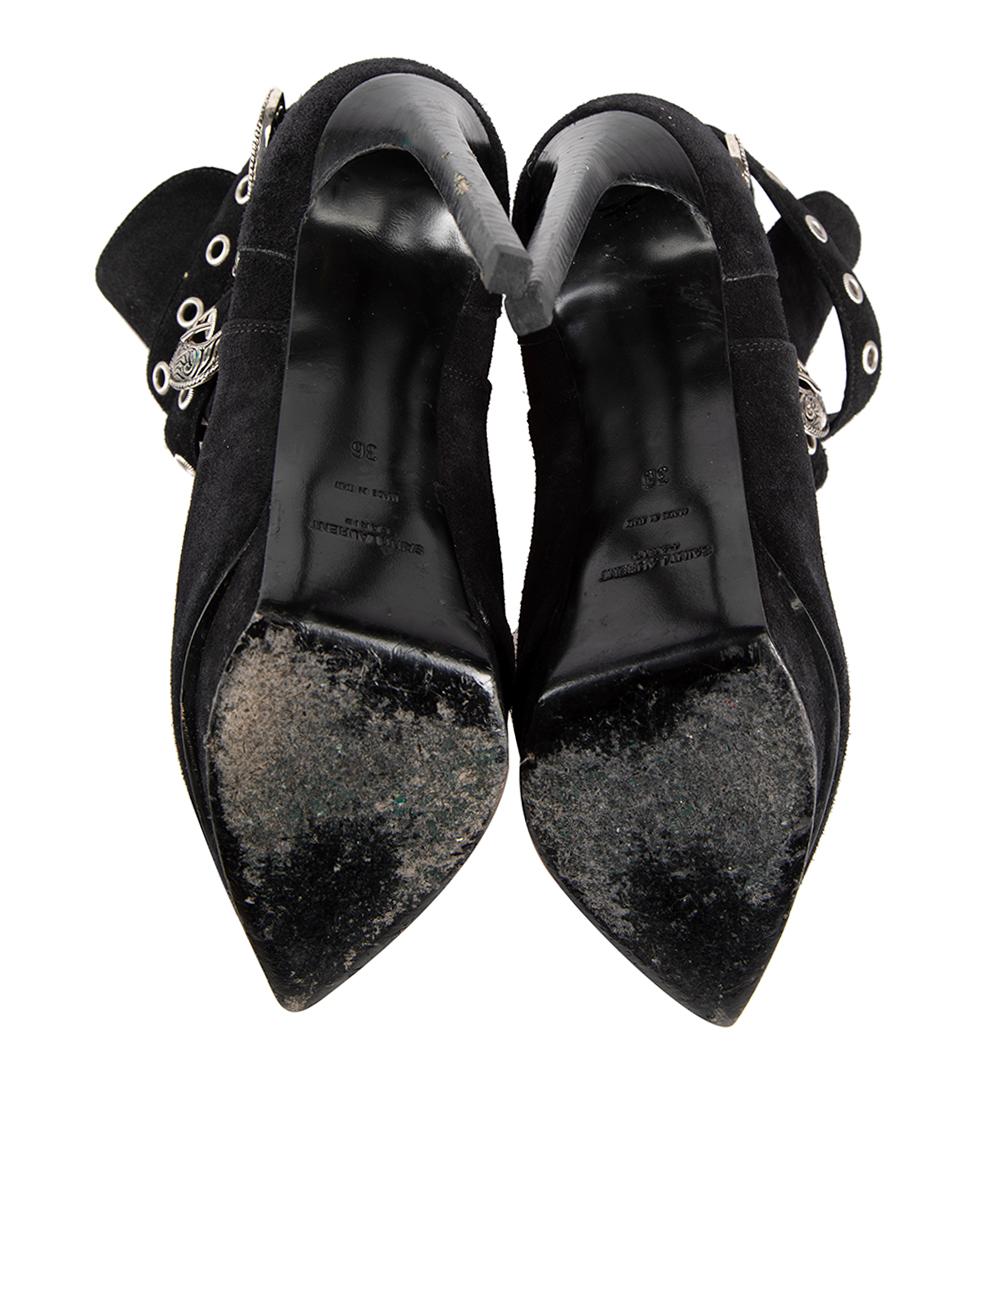 Women's Saint Laurent Black Suede Buckle Heeled Boots Size IT 36 For Sale